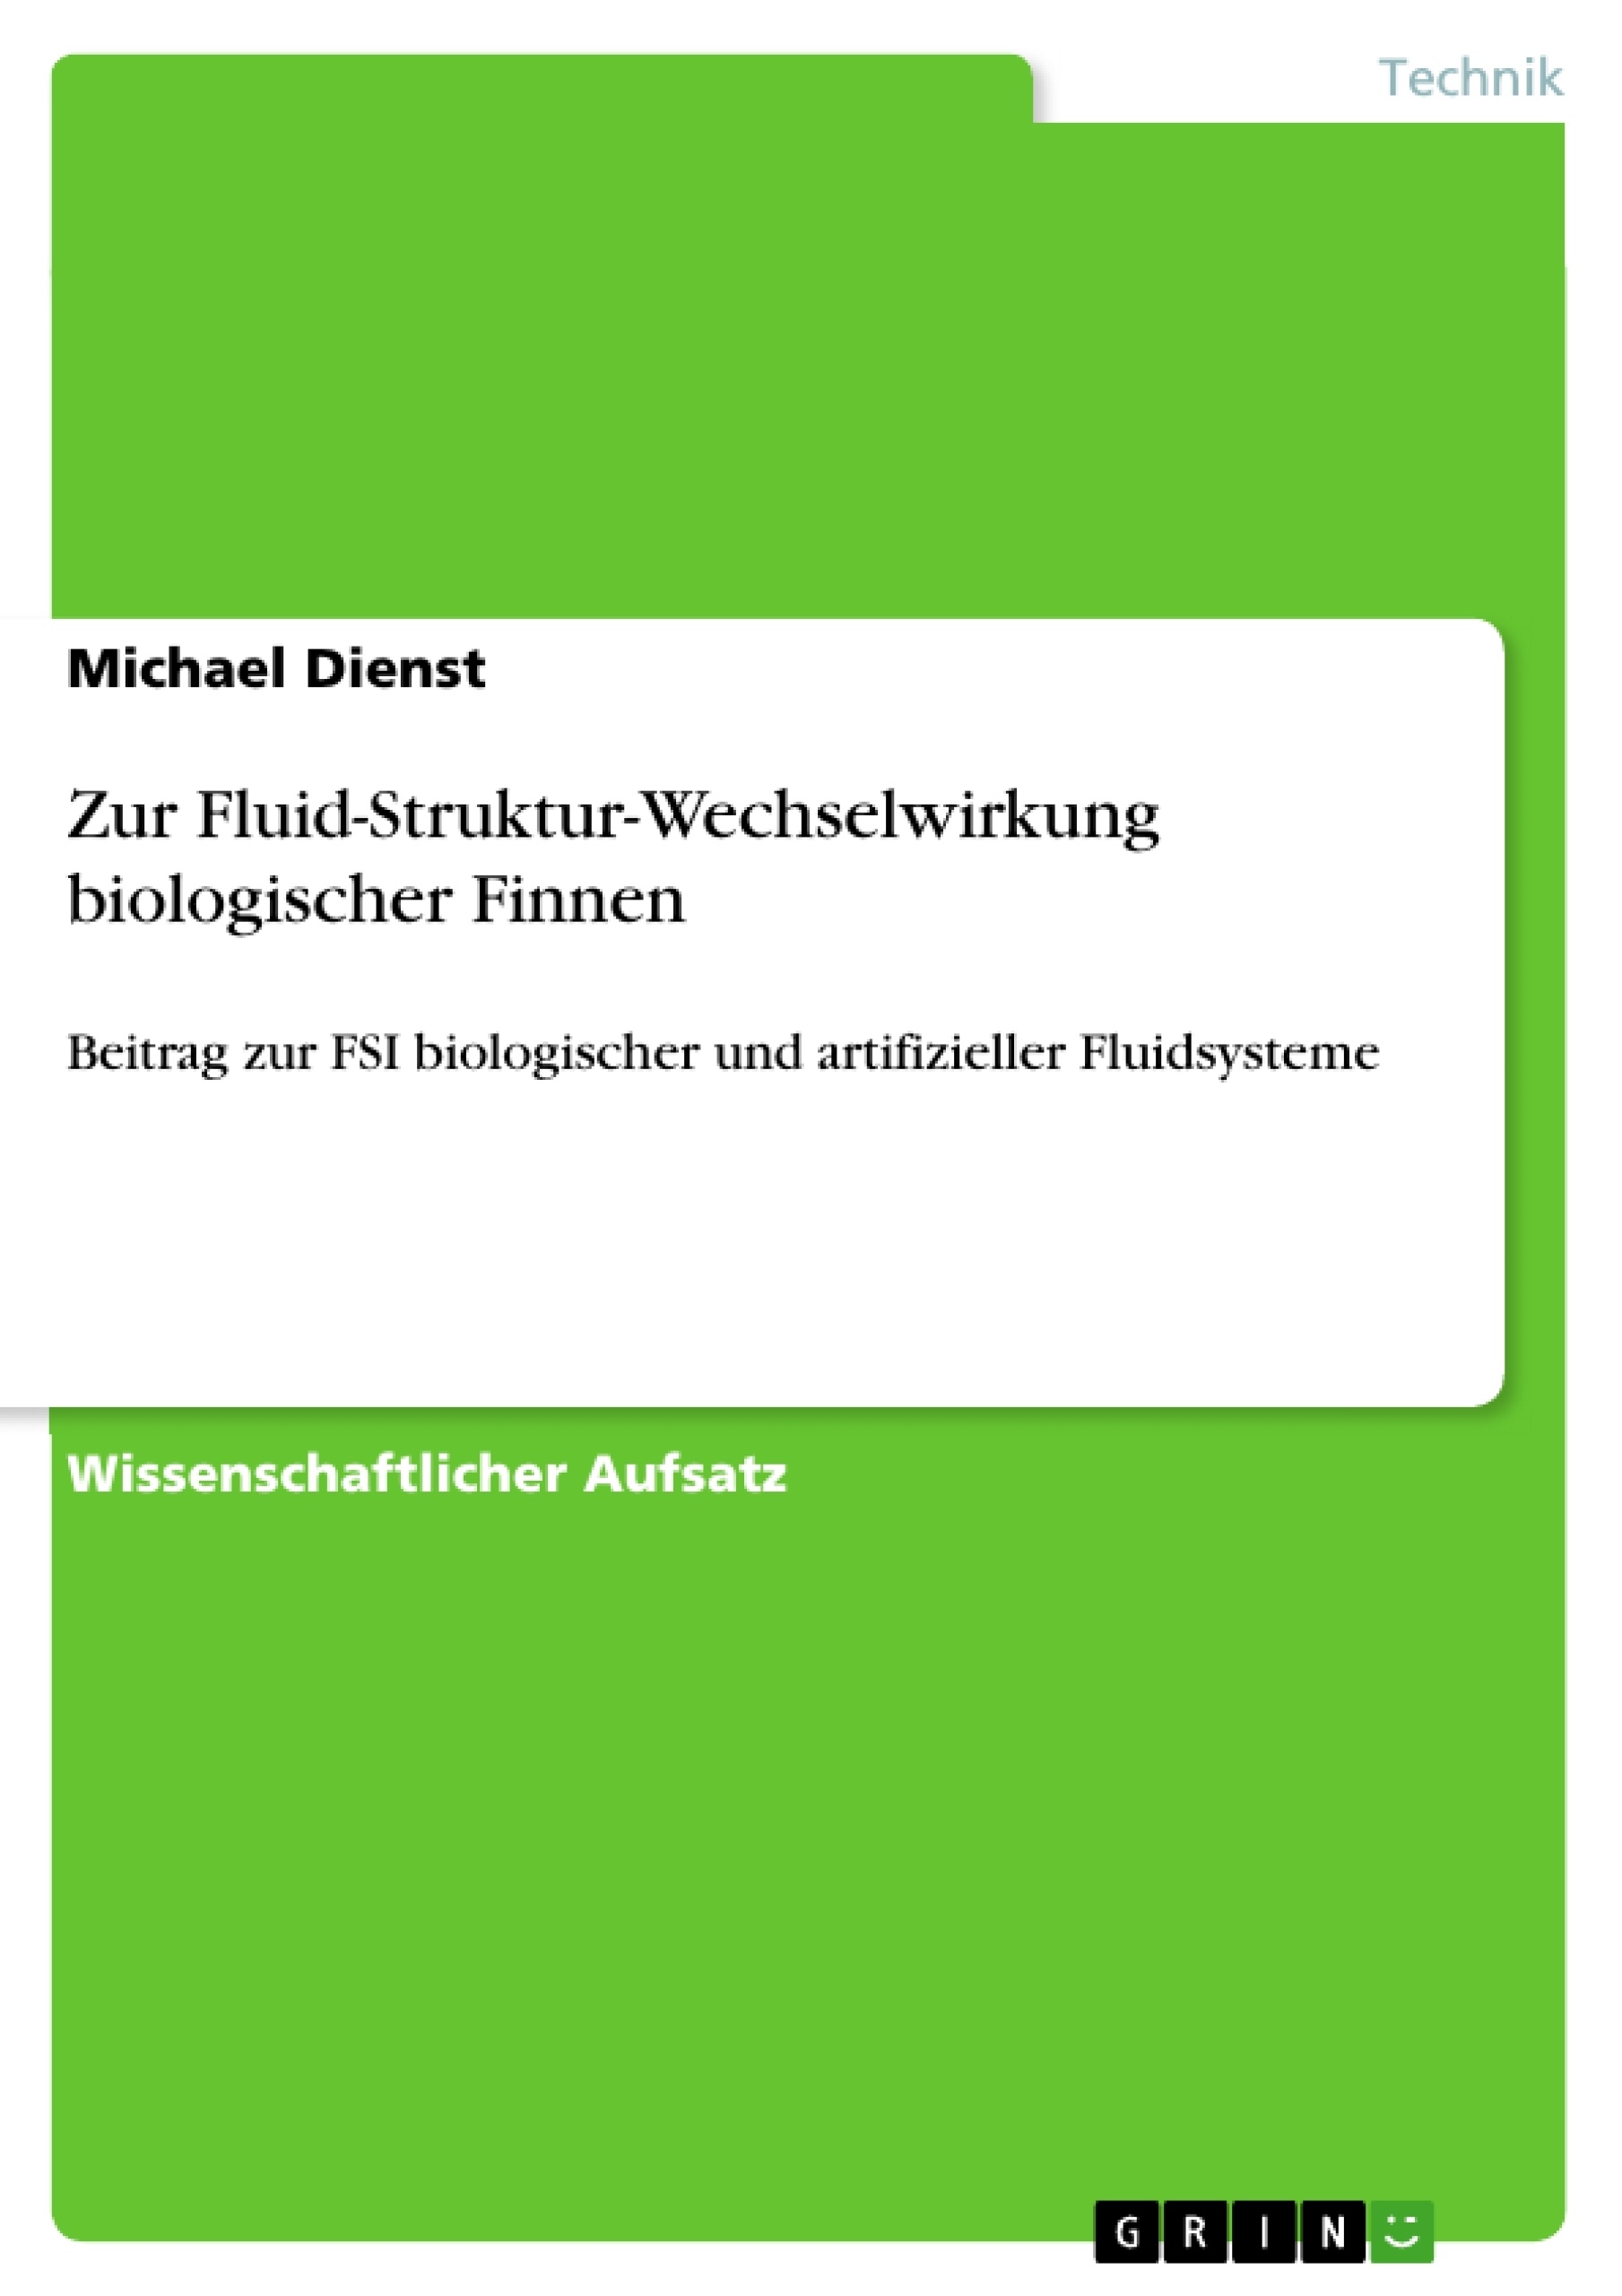 Titre: Zur Fluid-Struktur-Wechselwirkung biologischer Finnen